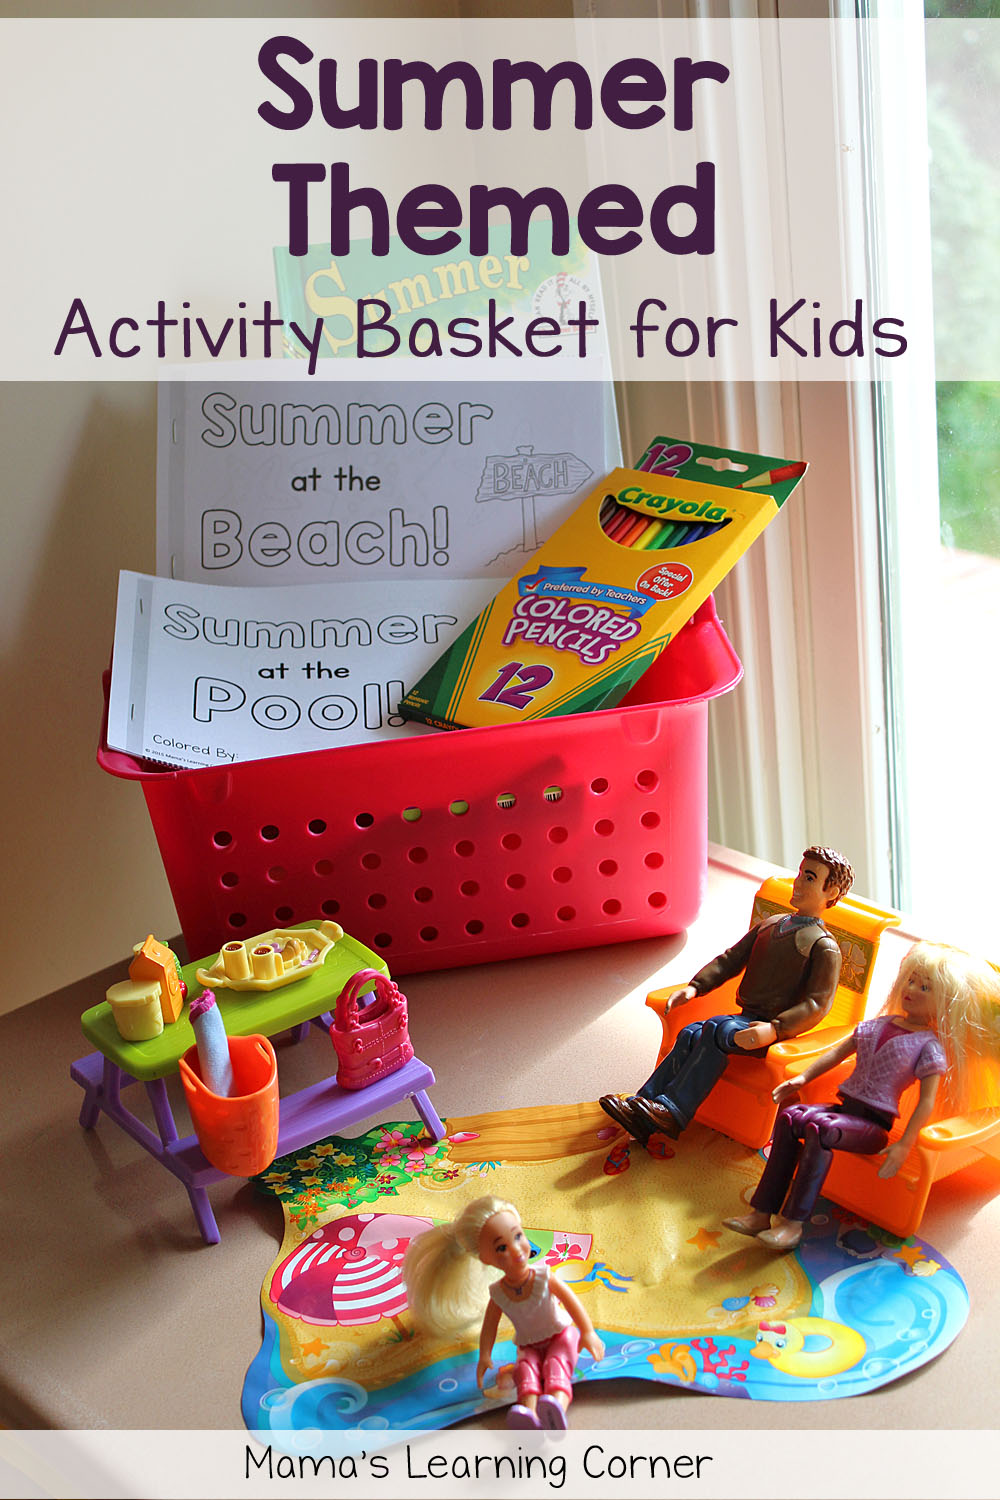 Activity Basket for Kids: Summer Themed